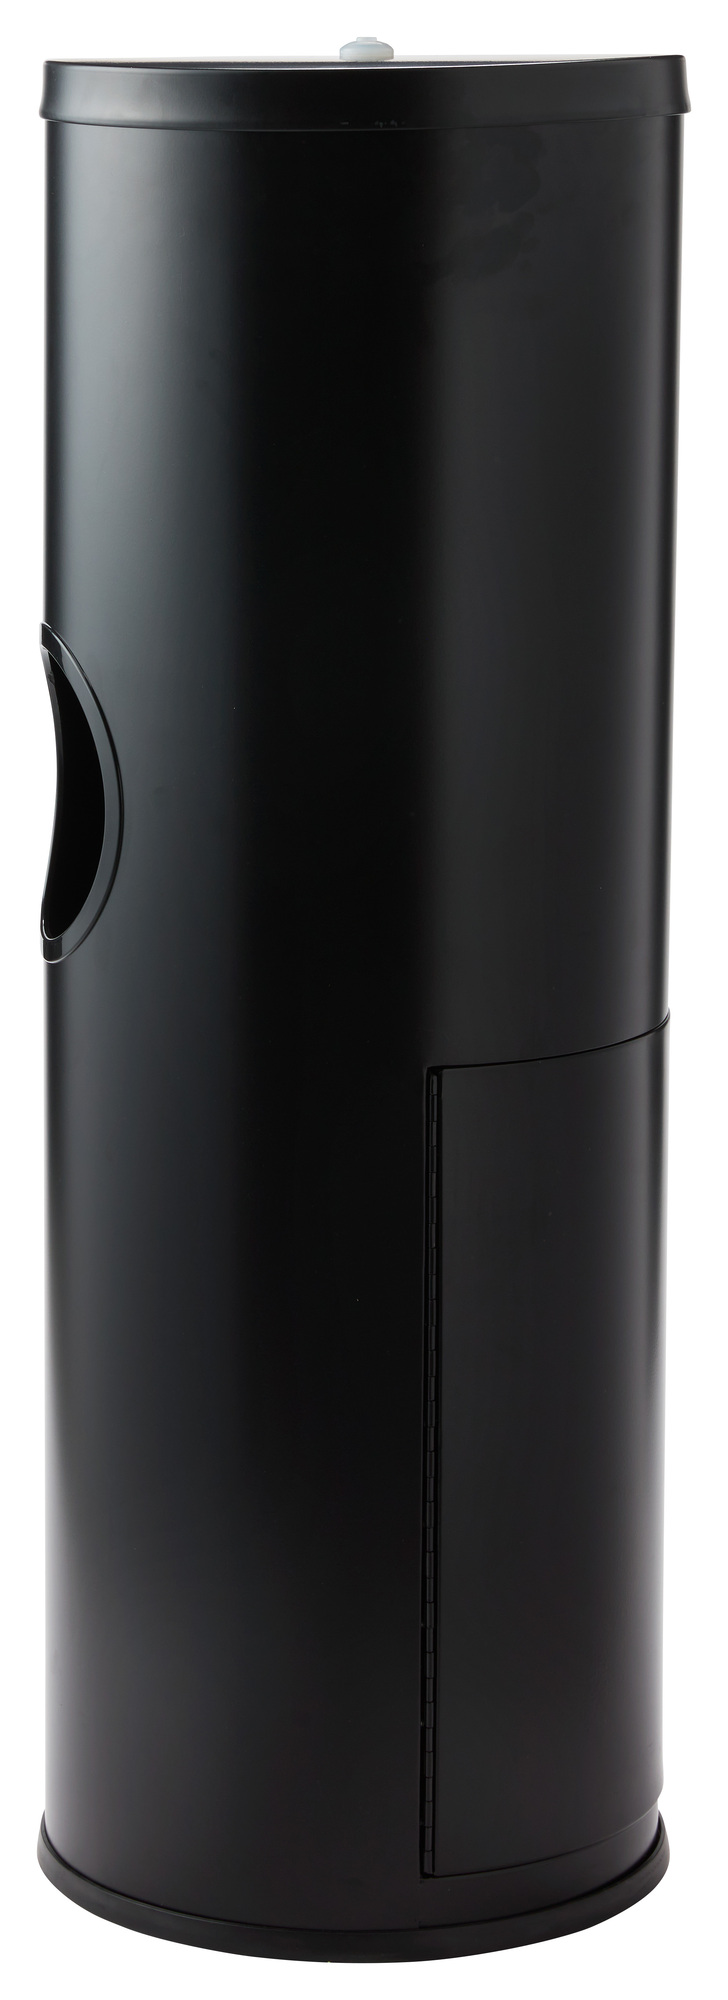 Stainless Steel Gym Wipes Dispenser (Black)